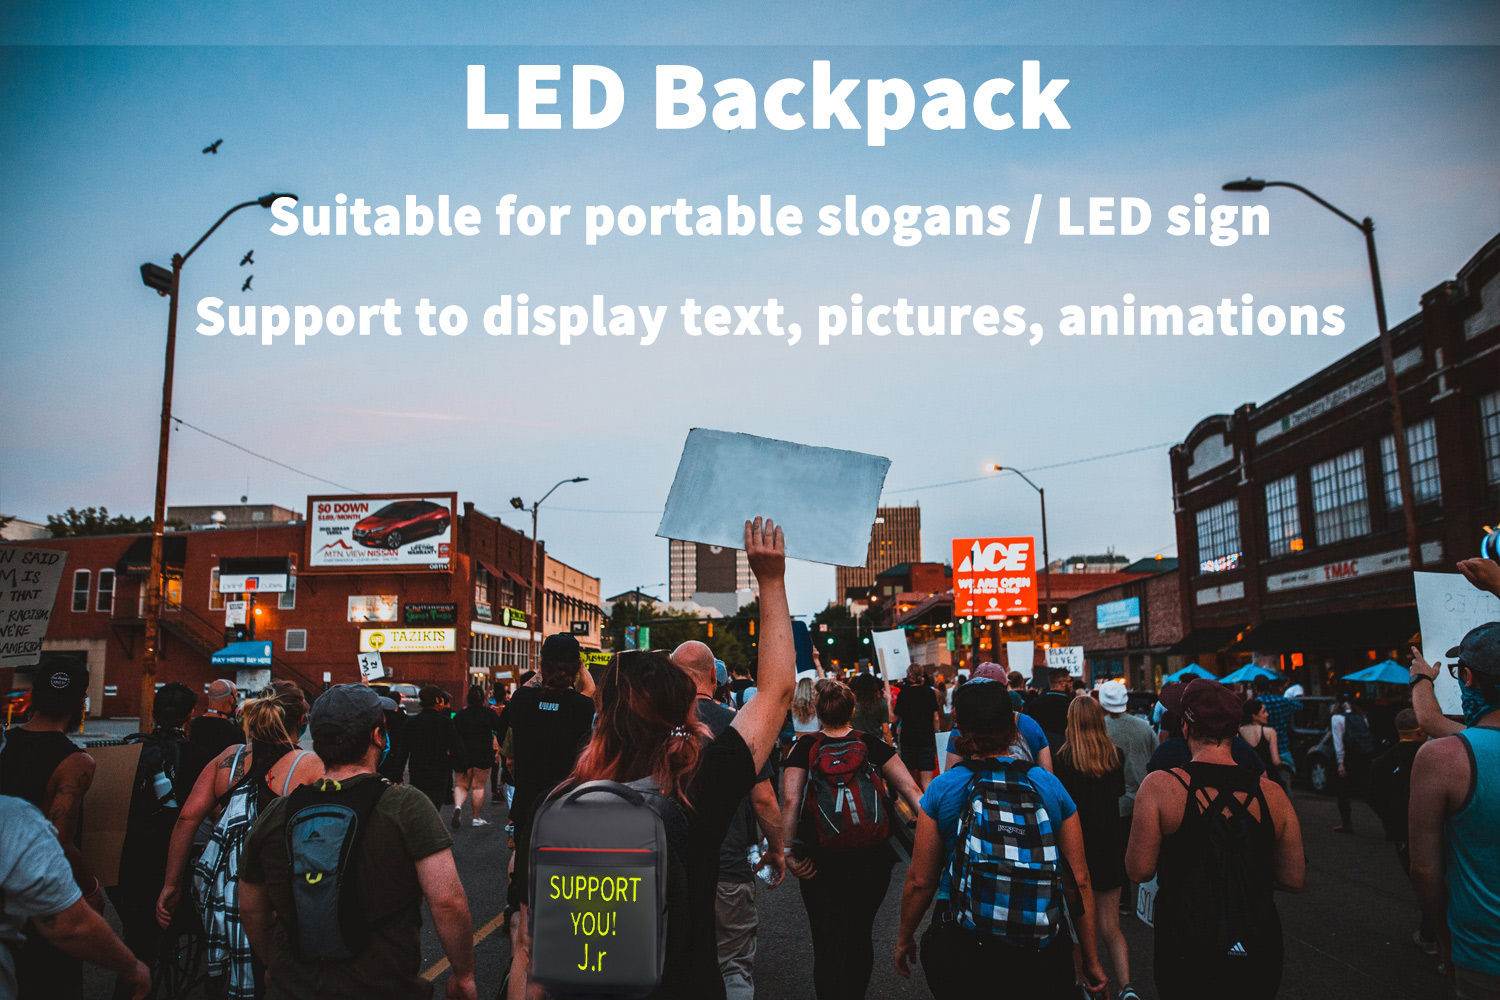 LED backpack usage